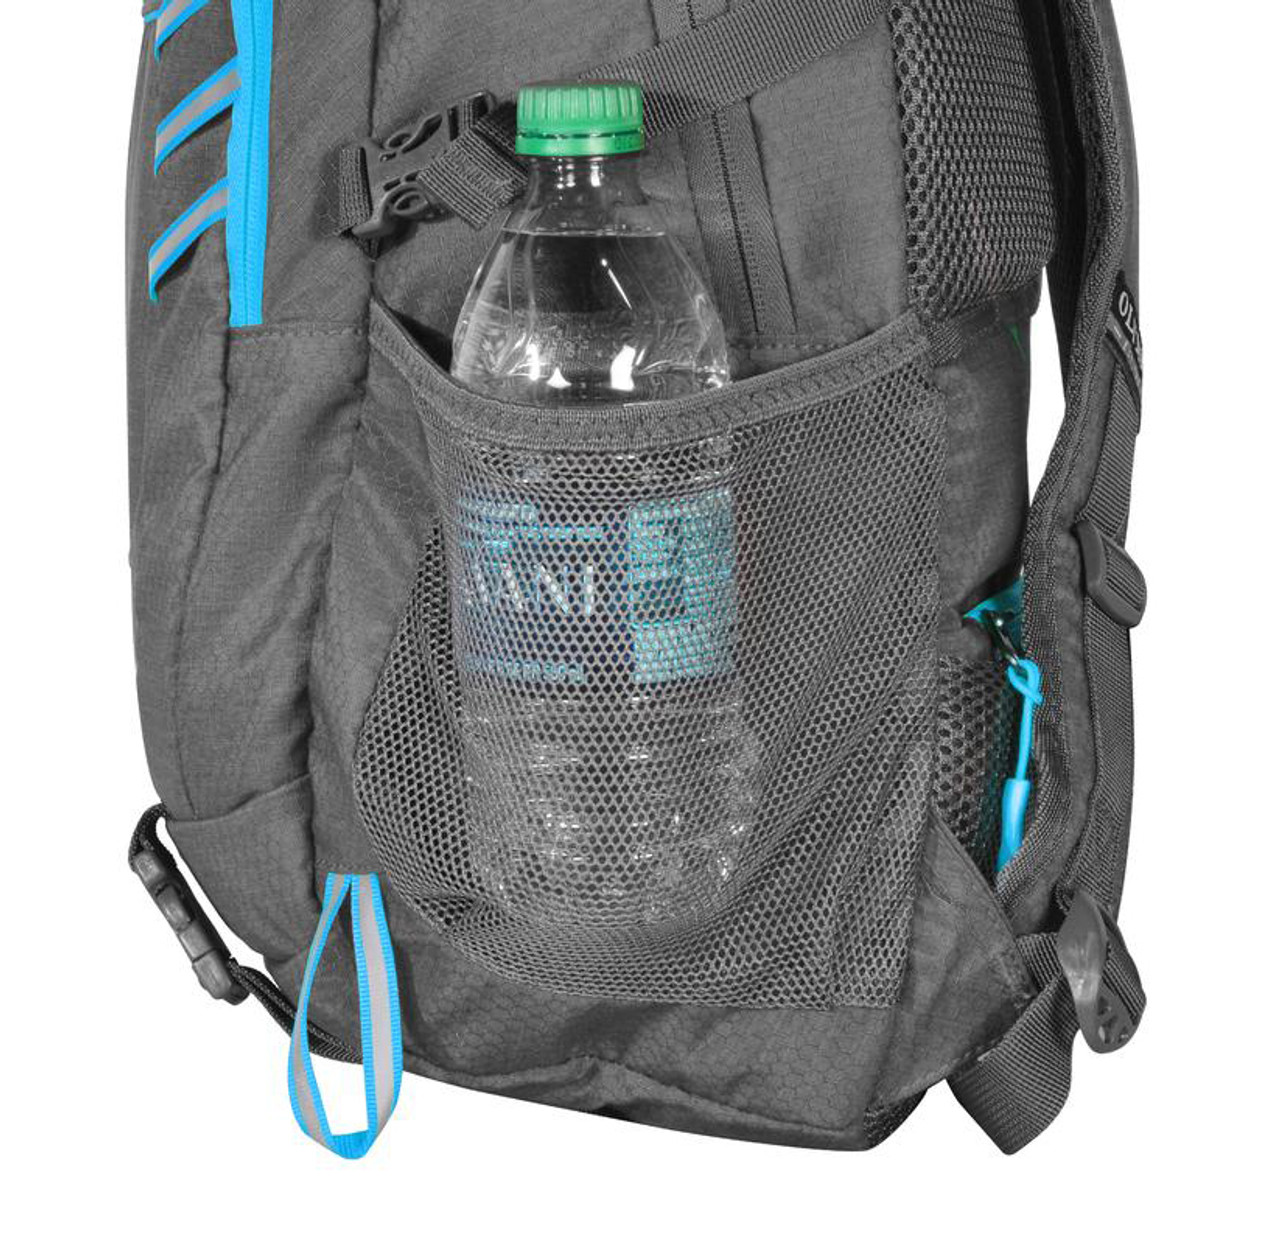 Olympia USA Huntsman 19" Outdoor Backpack product image